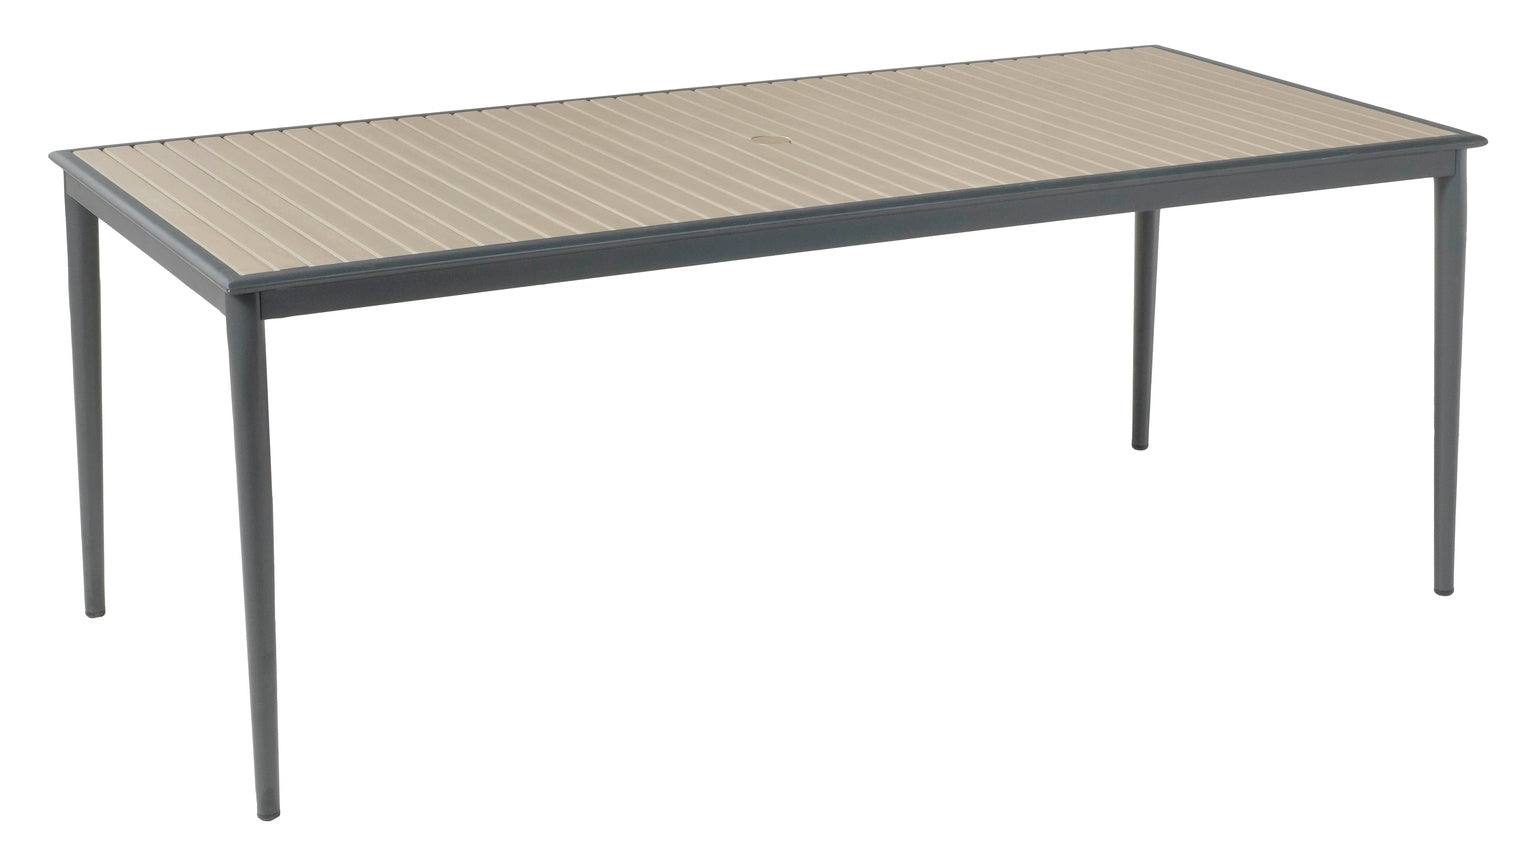 Alfresco Home Oden Dark Grey Polywood 78''L x 36.25''W Rectangular Dining Table with Umbrella Hole